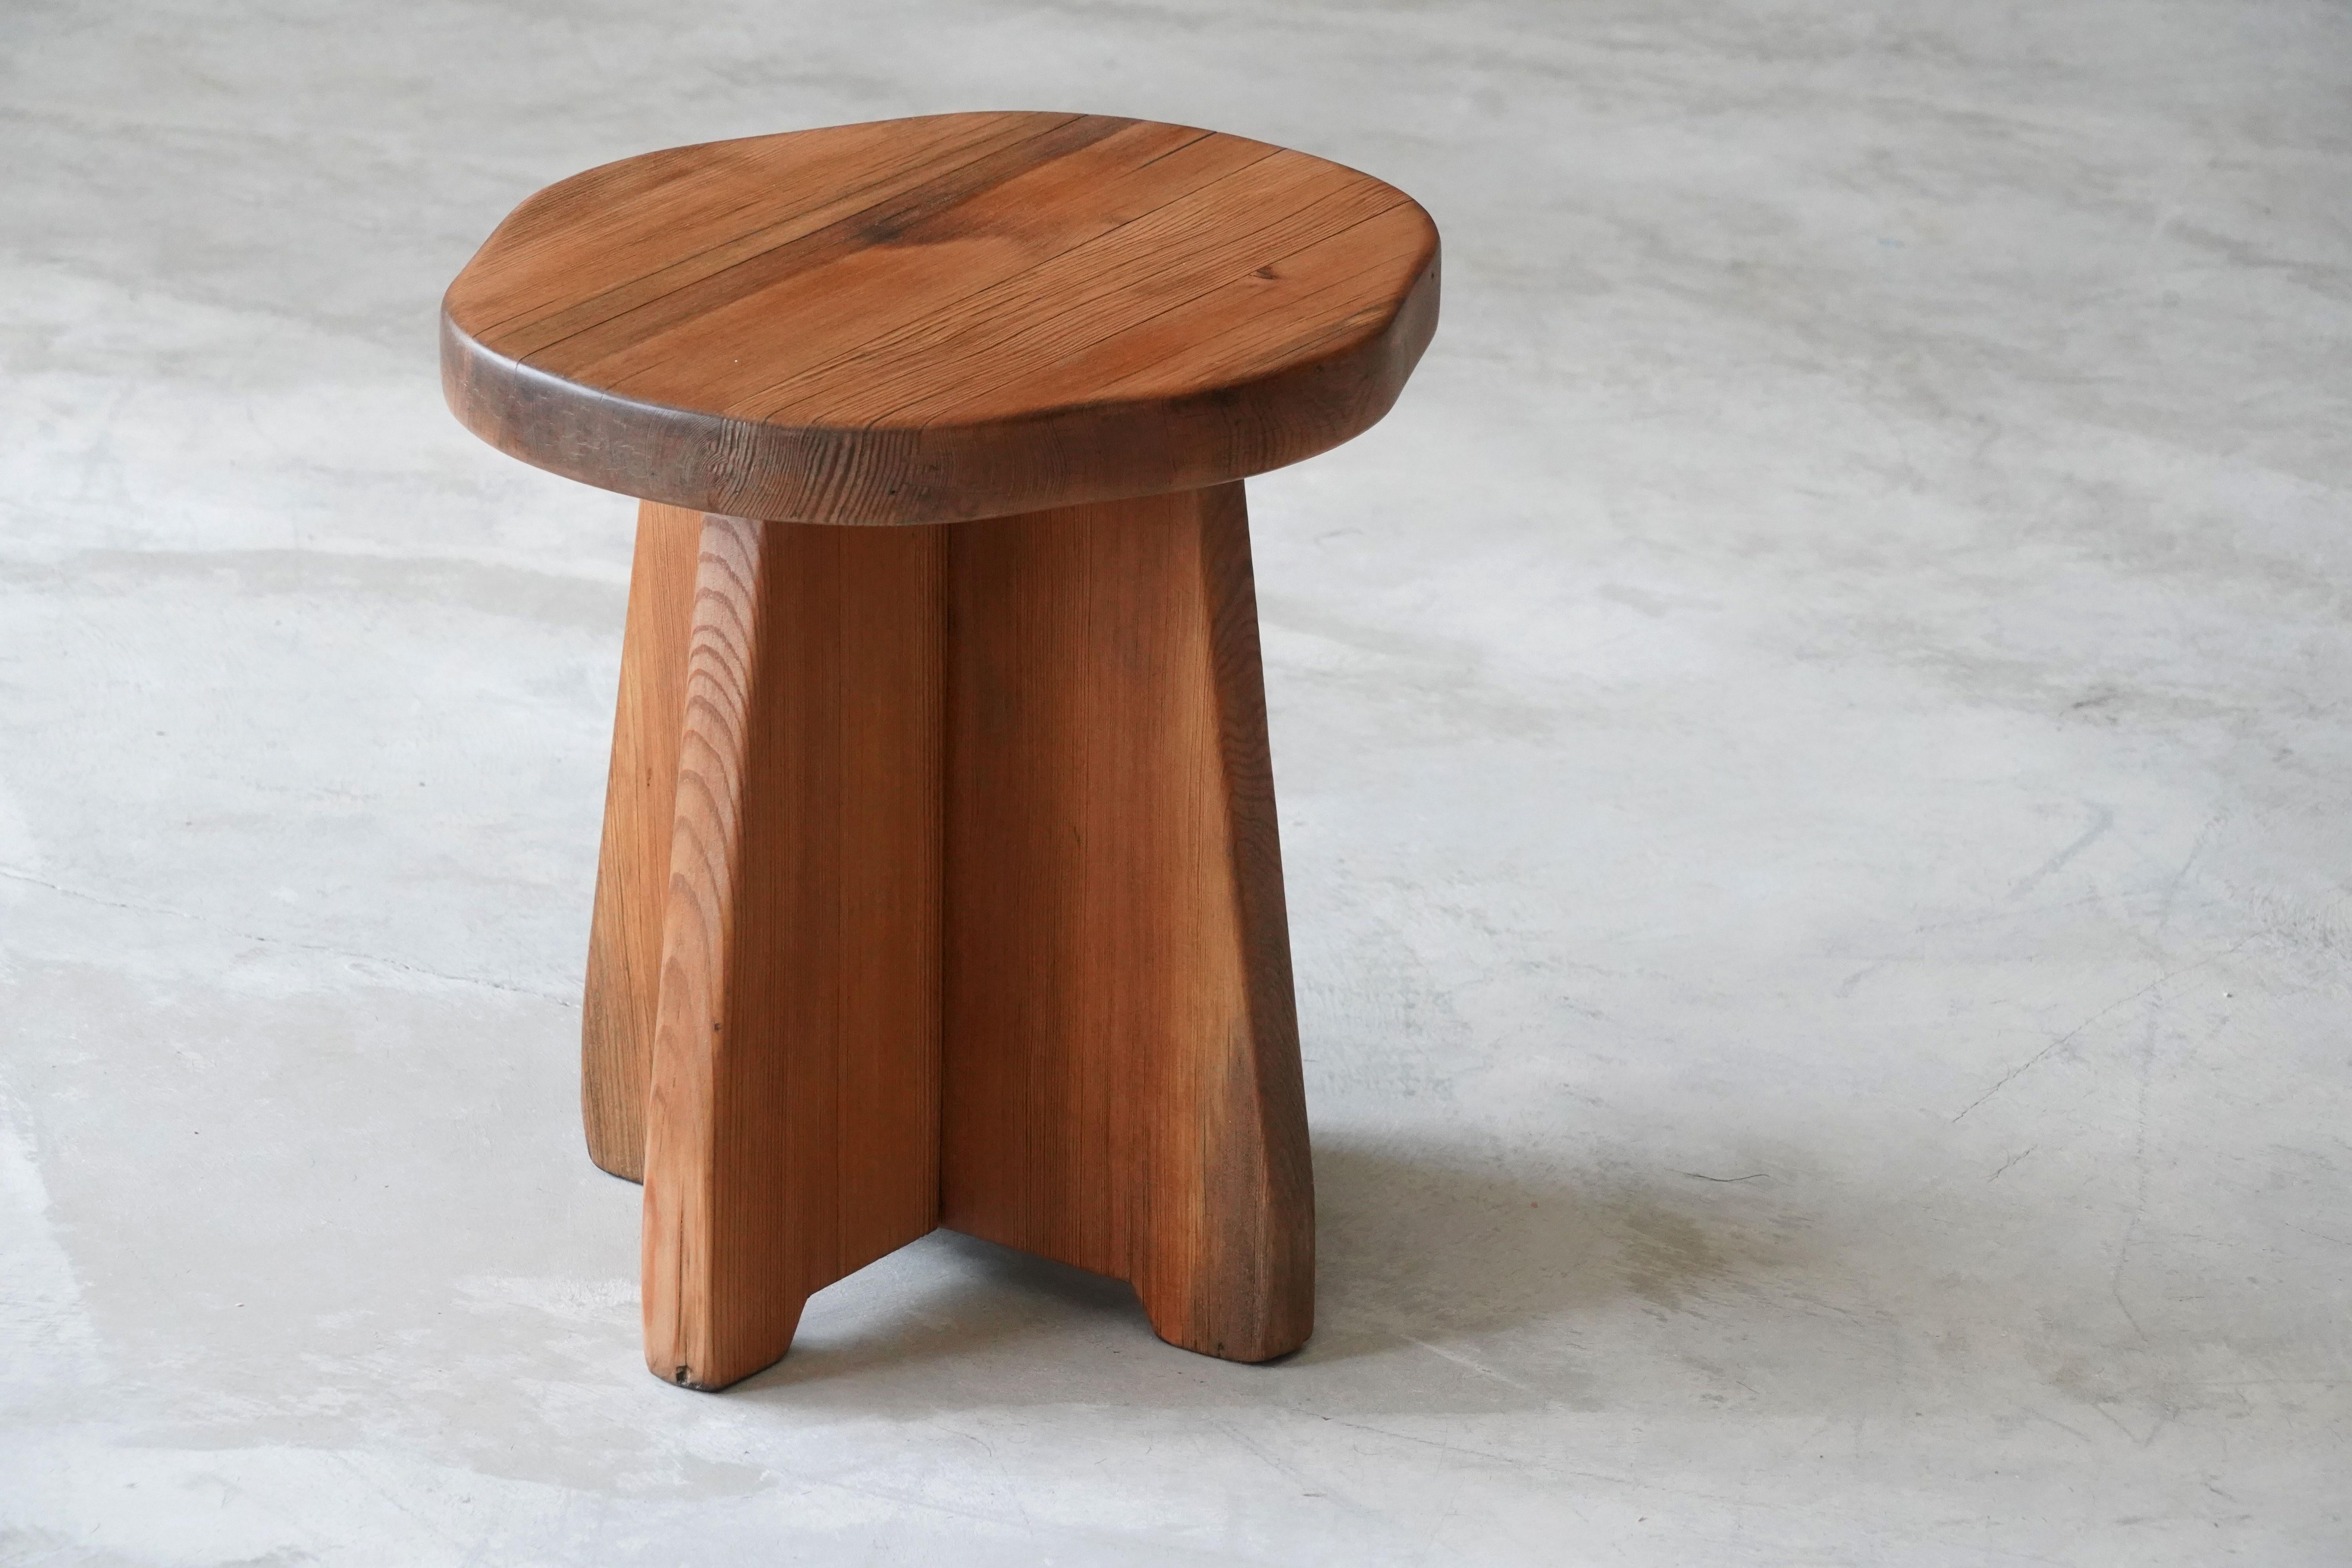 Scandinavian Modern David Rosén, Rare Modernist Stool or Side Table, Pine, Nordiska Kompaniet, 1930s